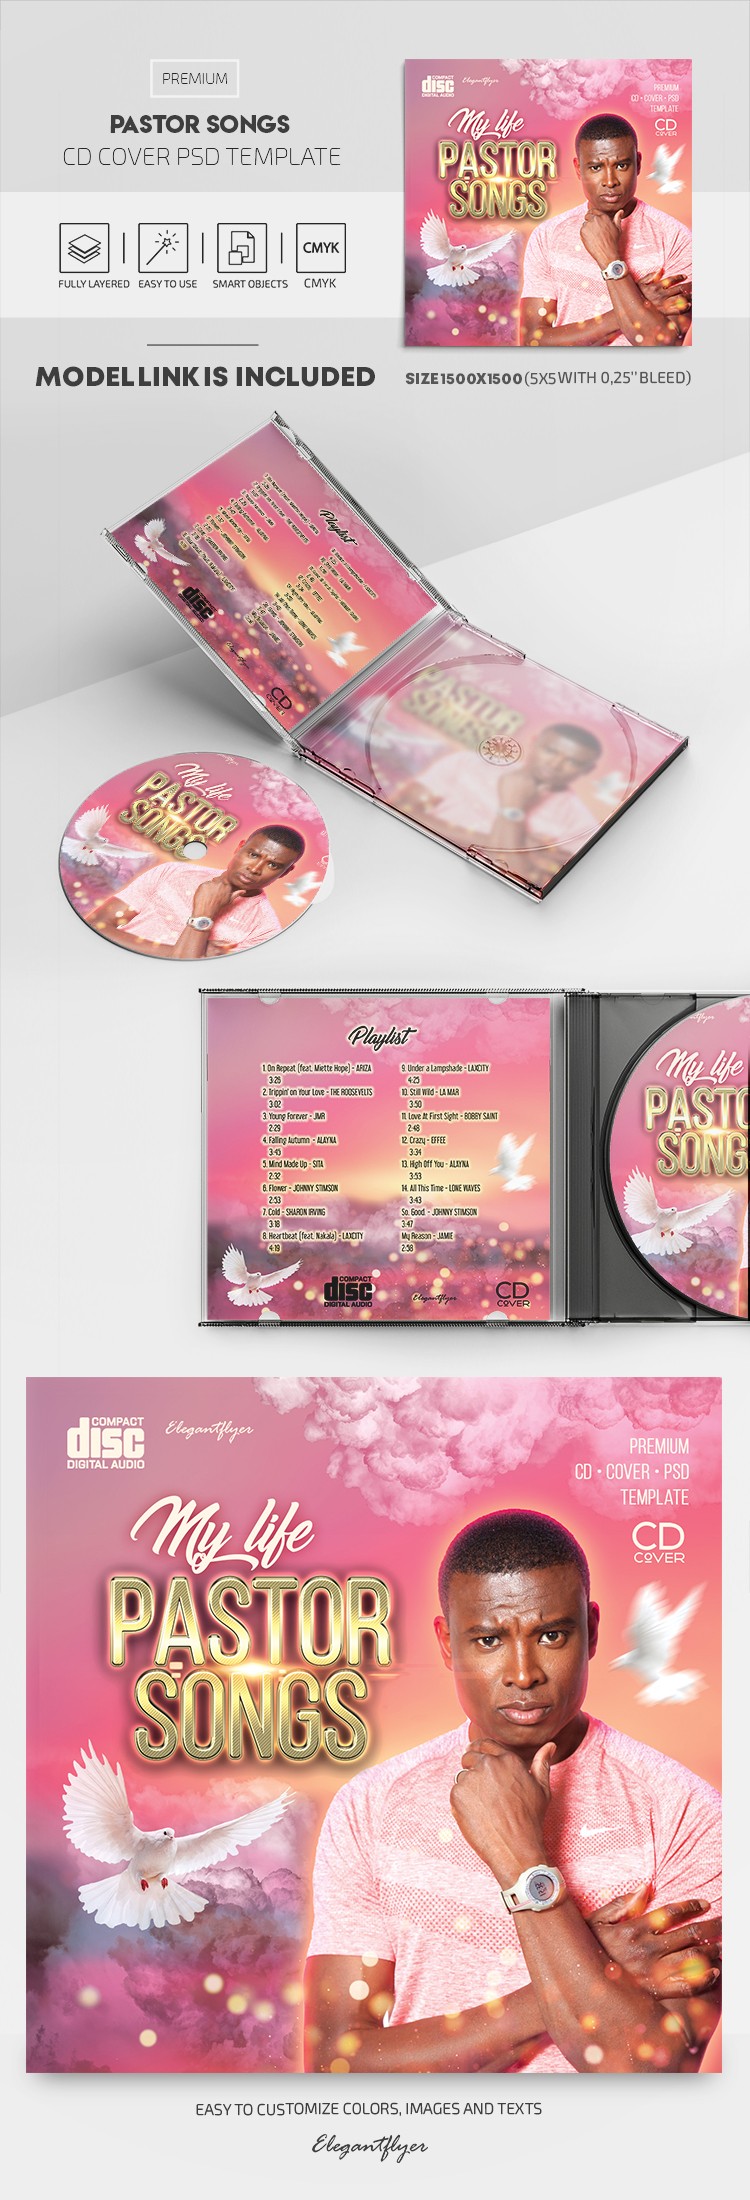 Pastorlieder CD Cover by ElegantFlyer